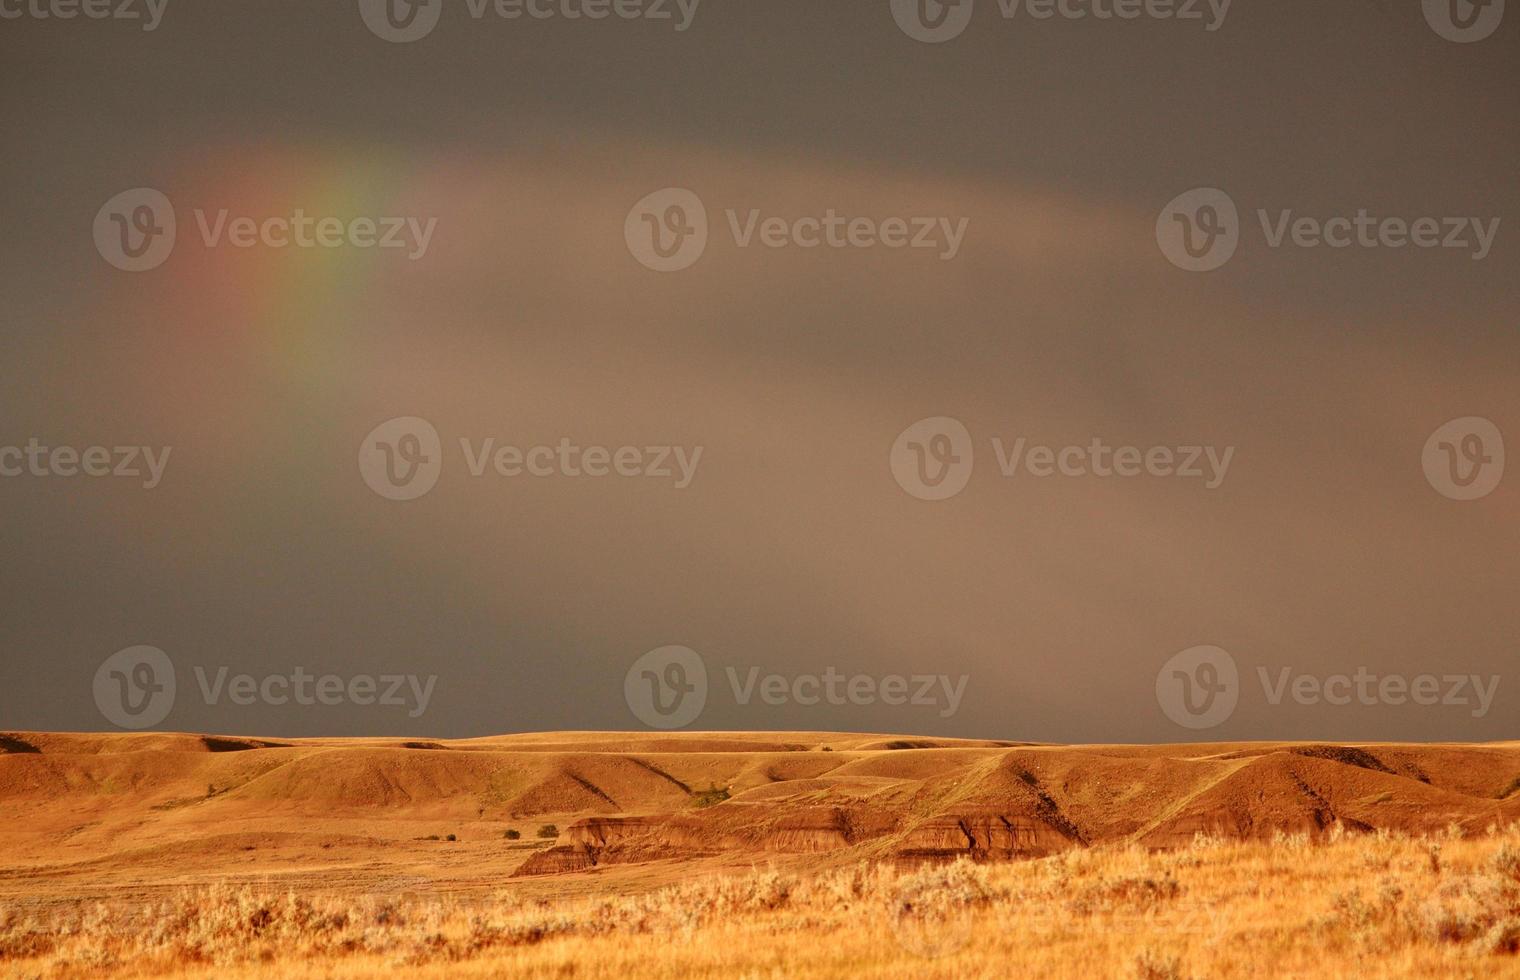 arcobaleno parziale sulla grande valle fangosa del saskatchewan foto